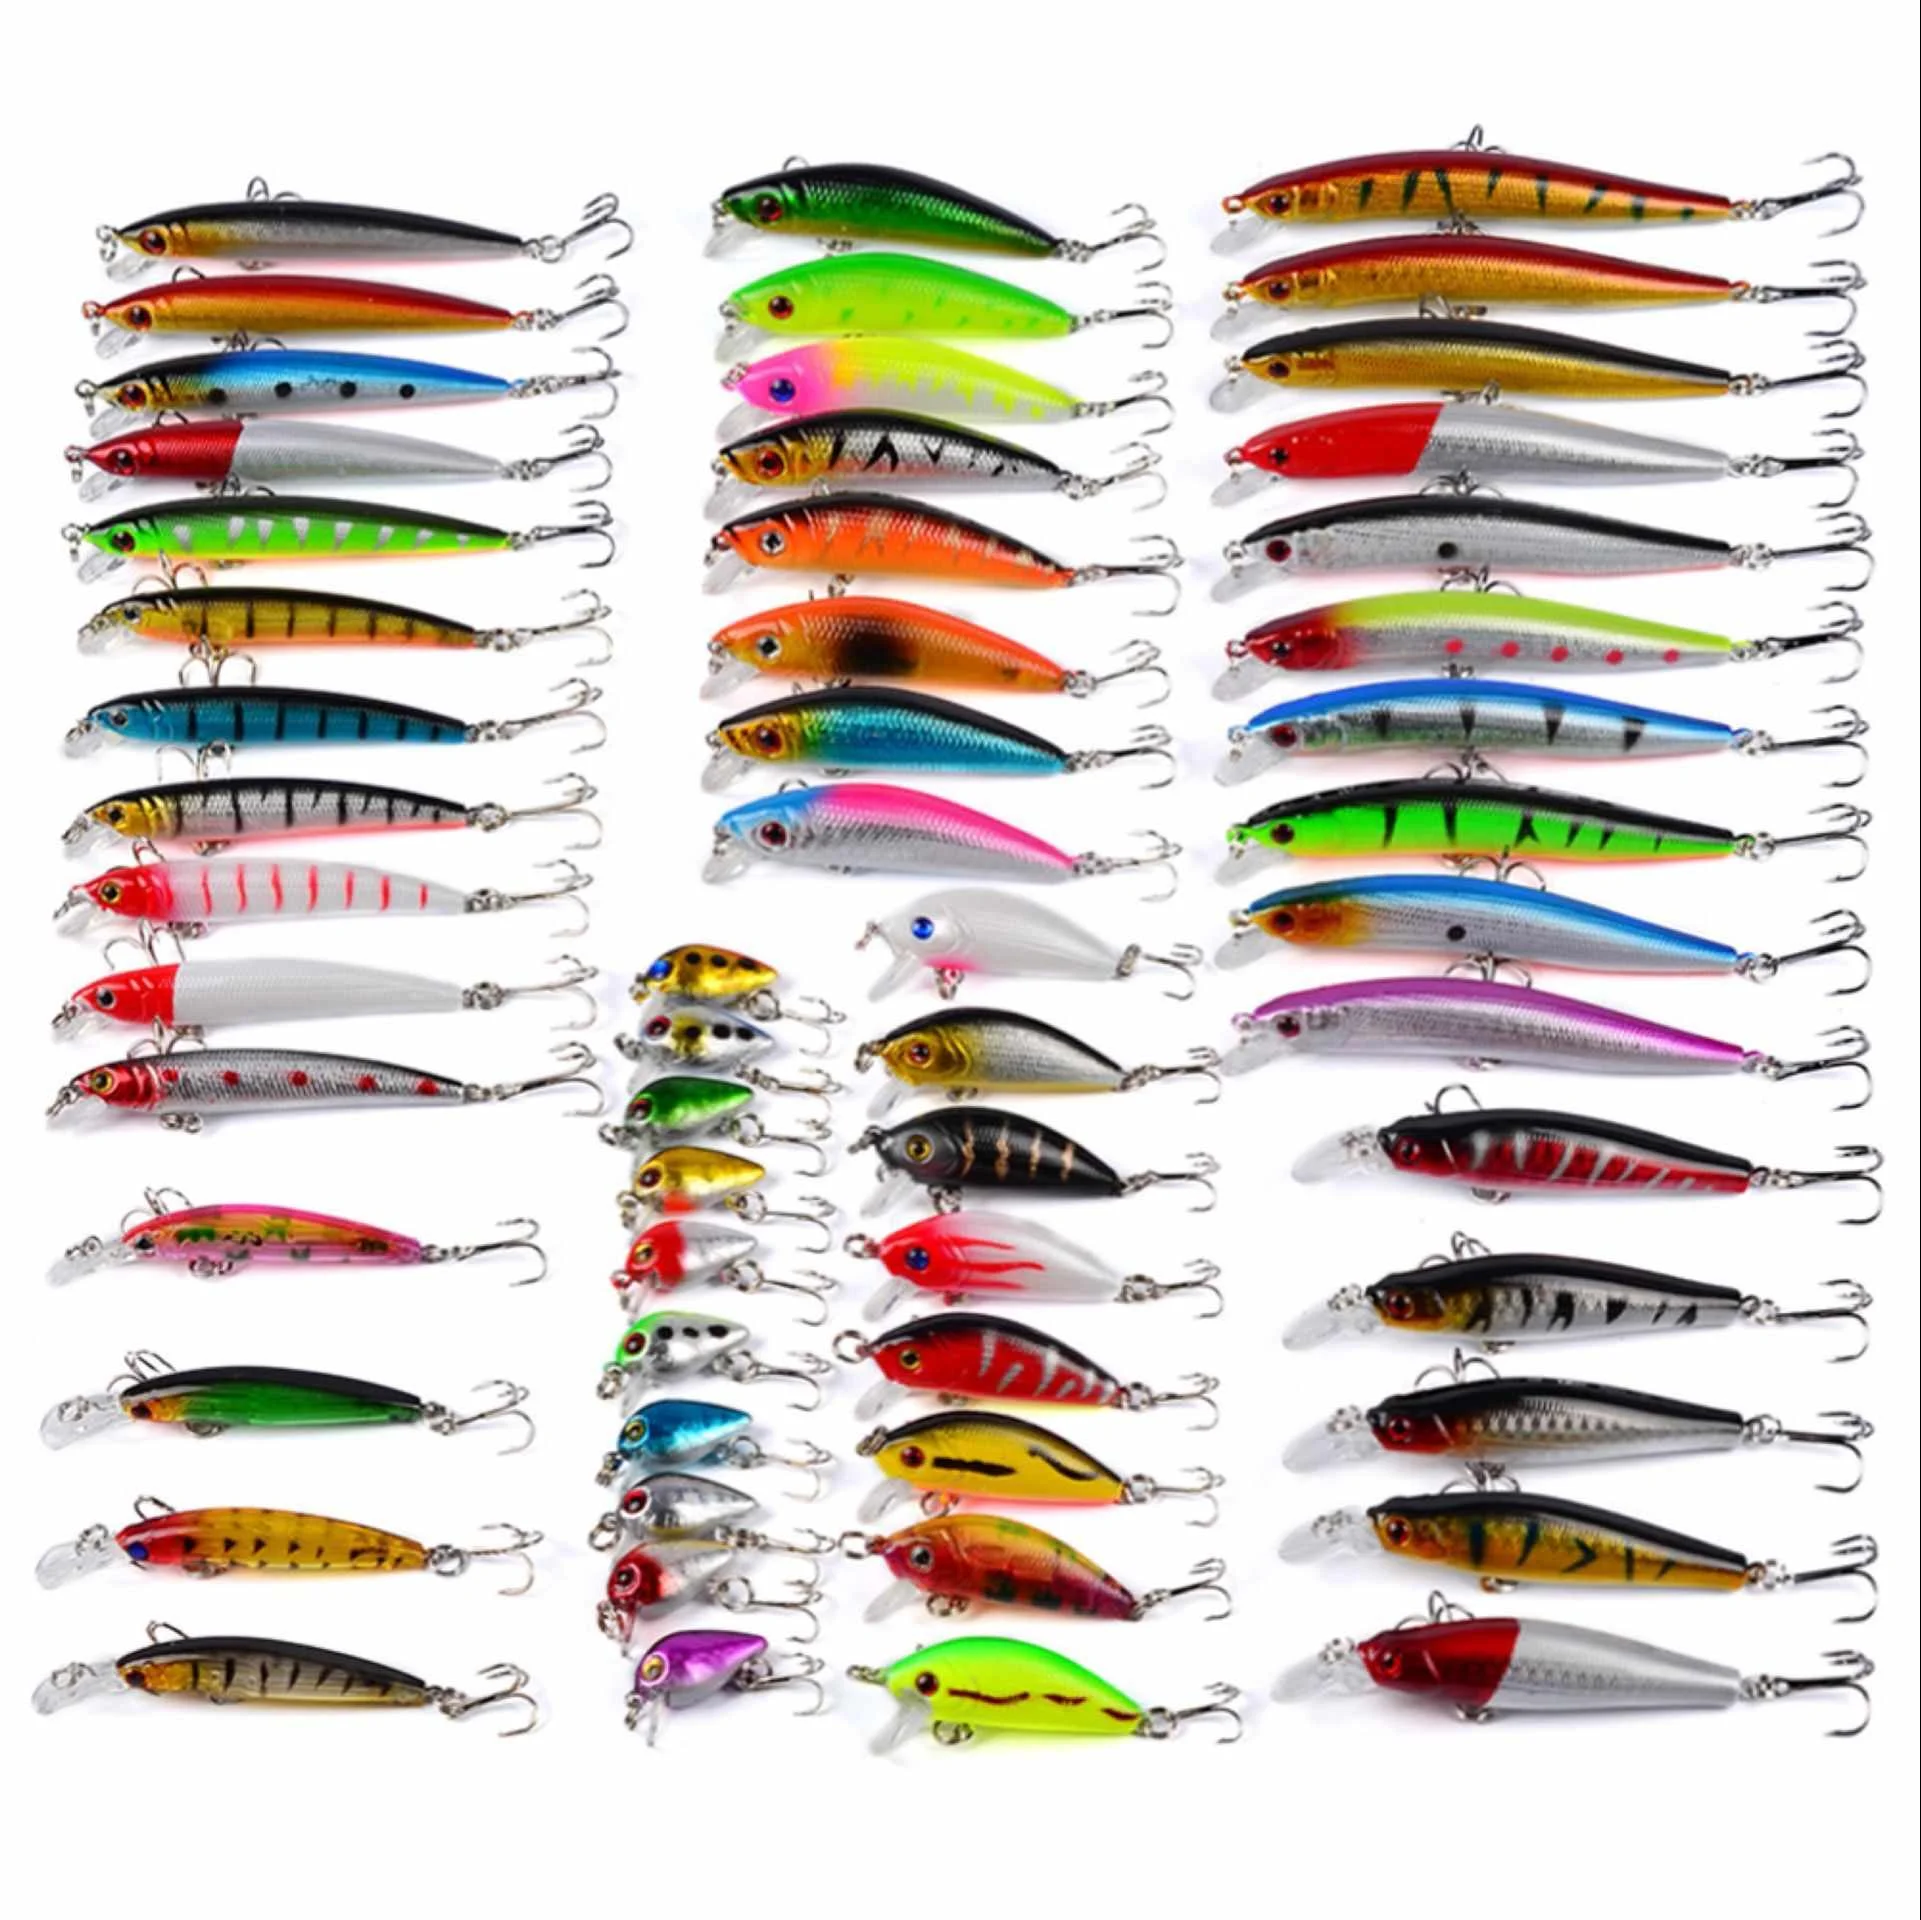 

56PCS Assorted Fishing Lure Kit Colorful Minnow Popper Crank VIB Fishing Lure Set, As picture